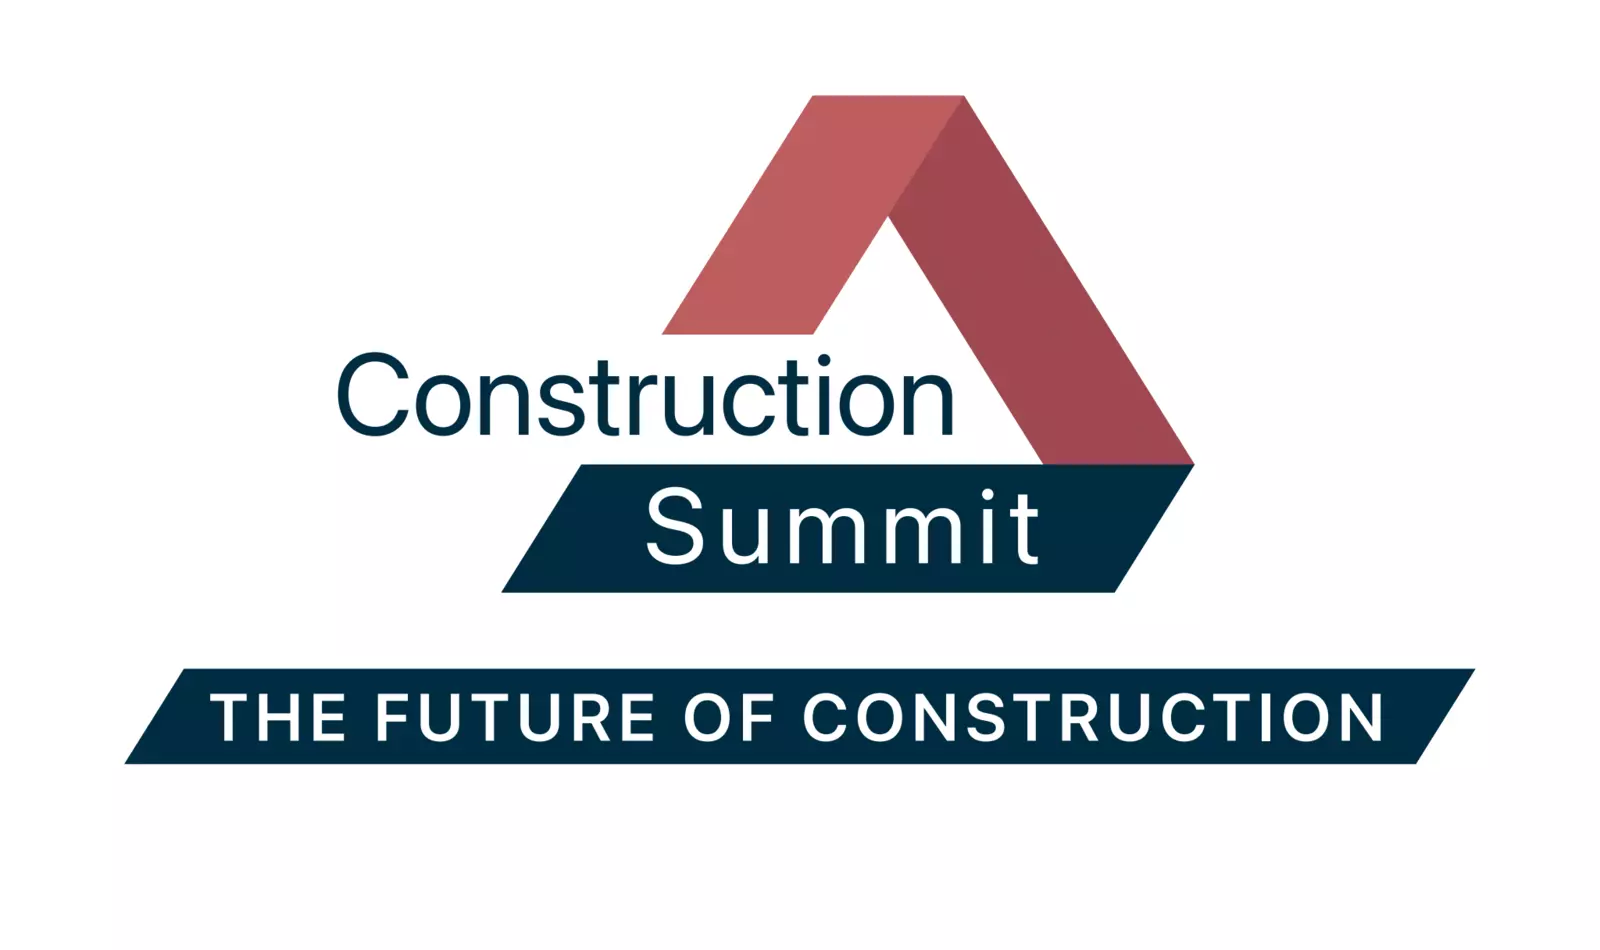 Construction Summit Logo & Claim